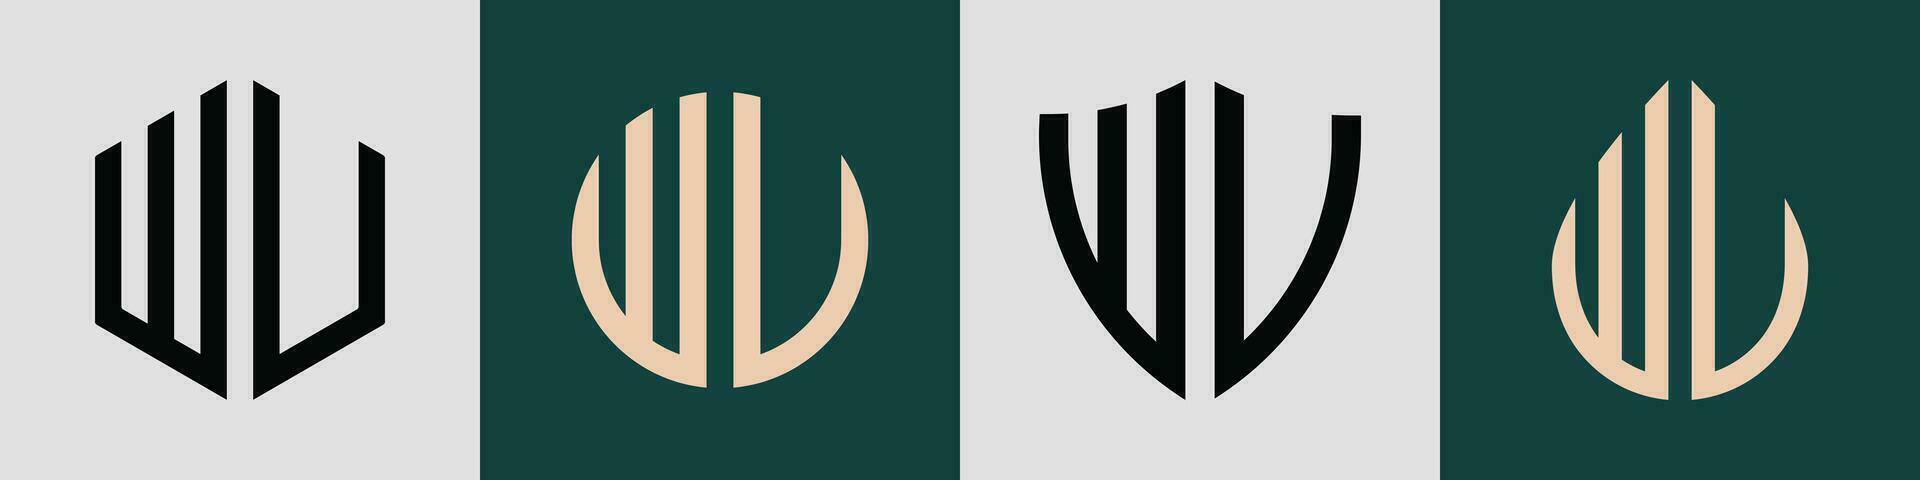 Creative simple Initial Letters WU Logo Designs Bundle. vector